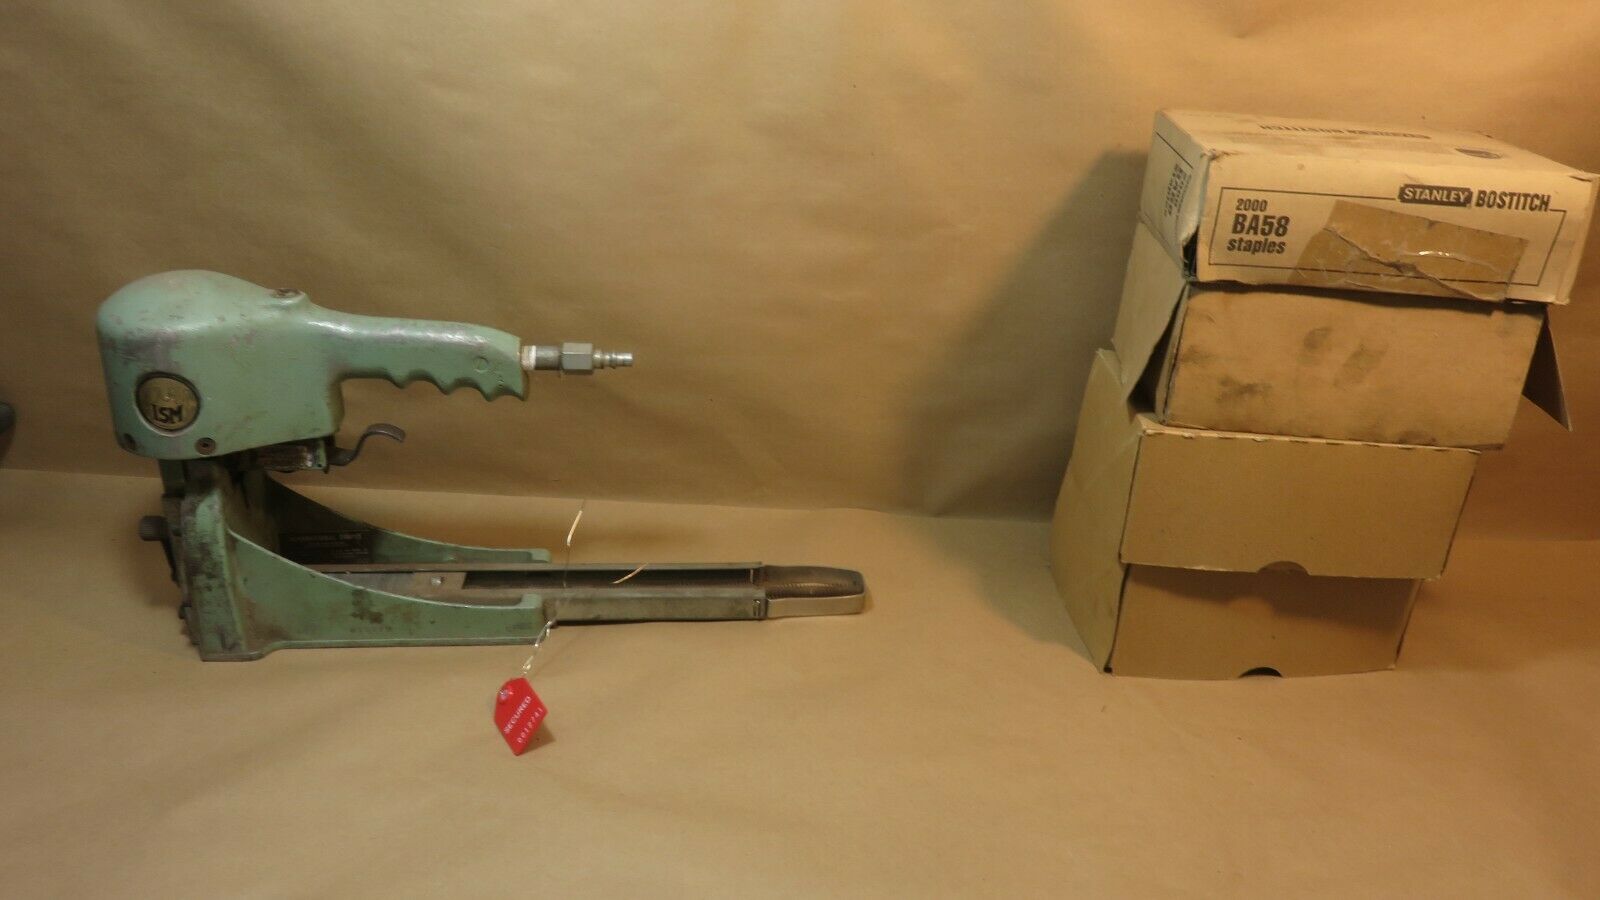 Pneumatic International Cardboard Carton Box Stapler Air Tool Model #ab7 010279